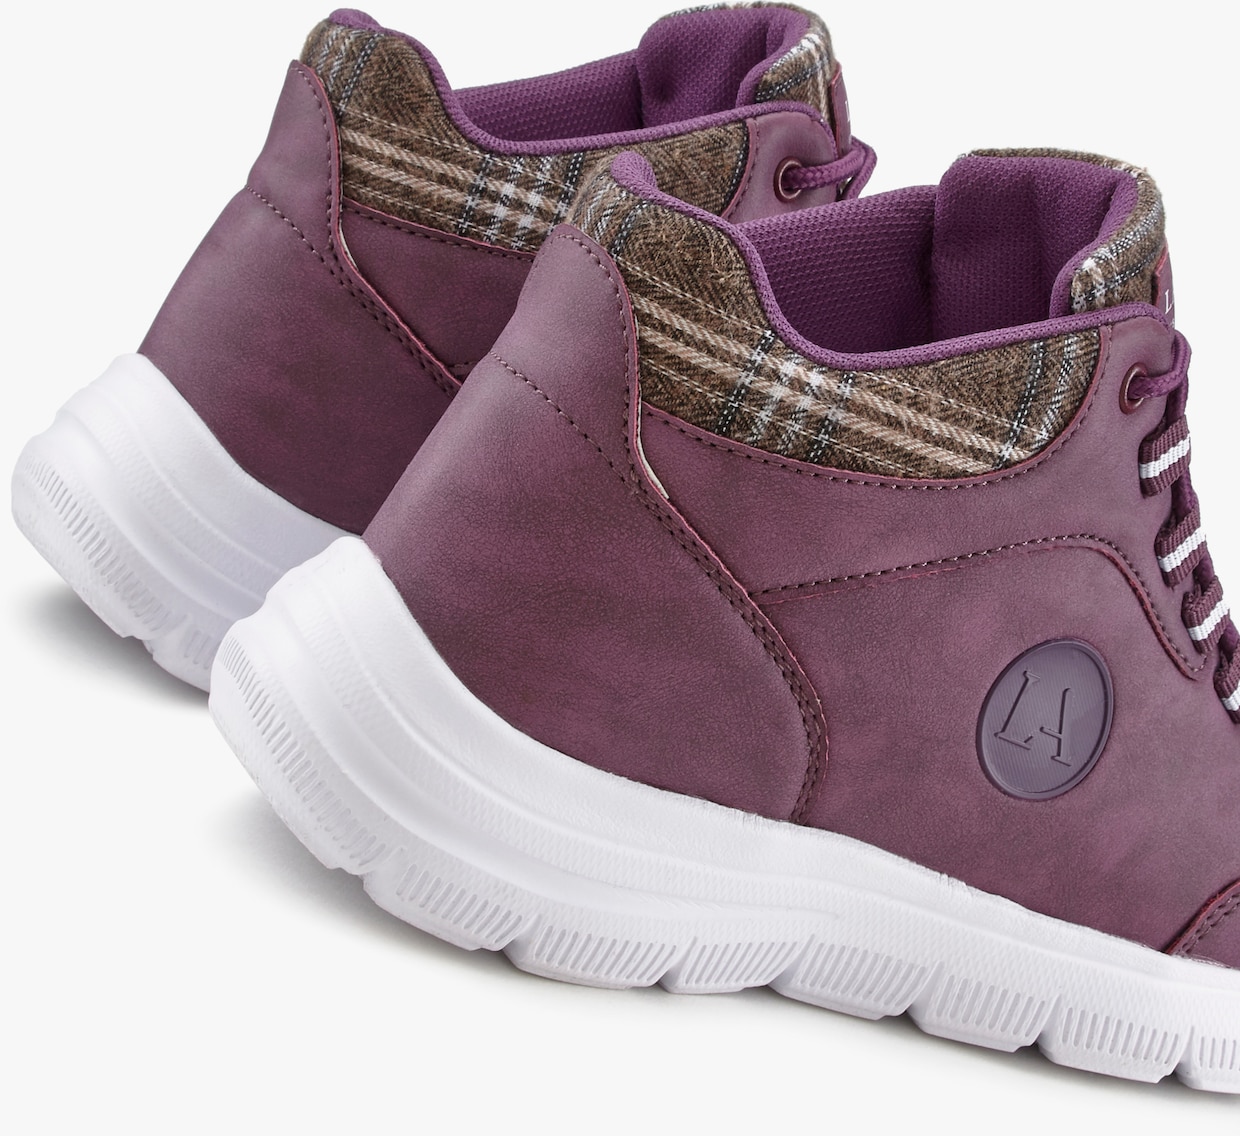 LASCANA Sneakers - violet